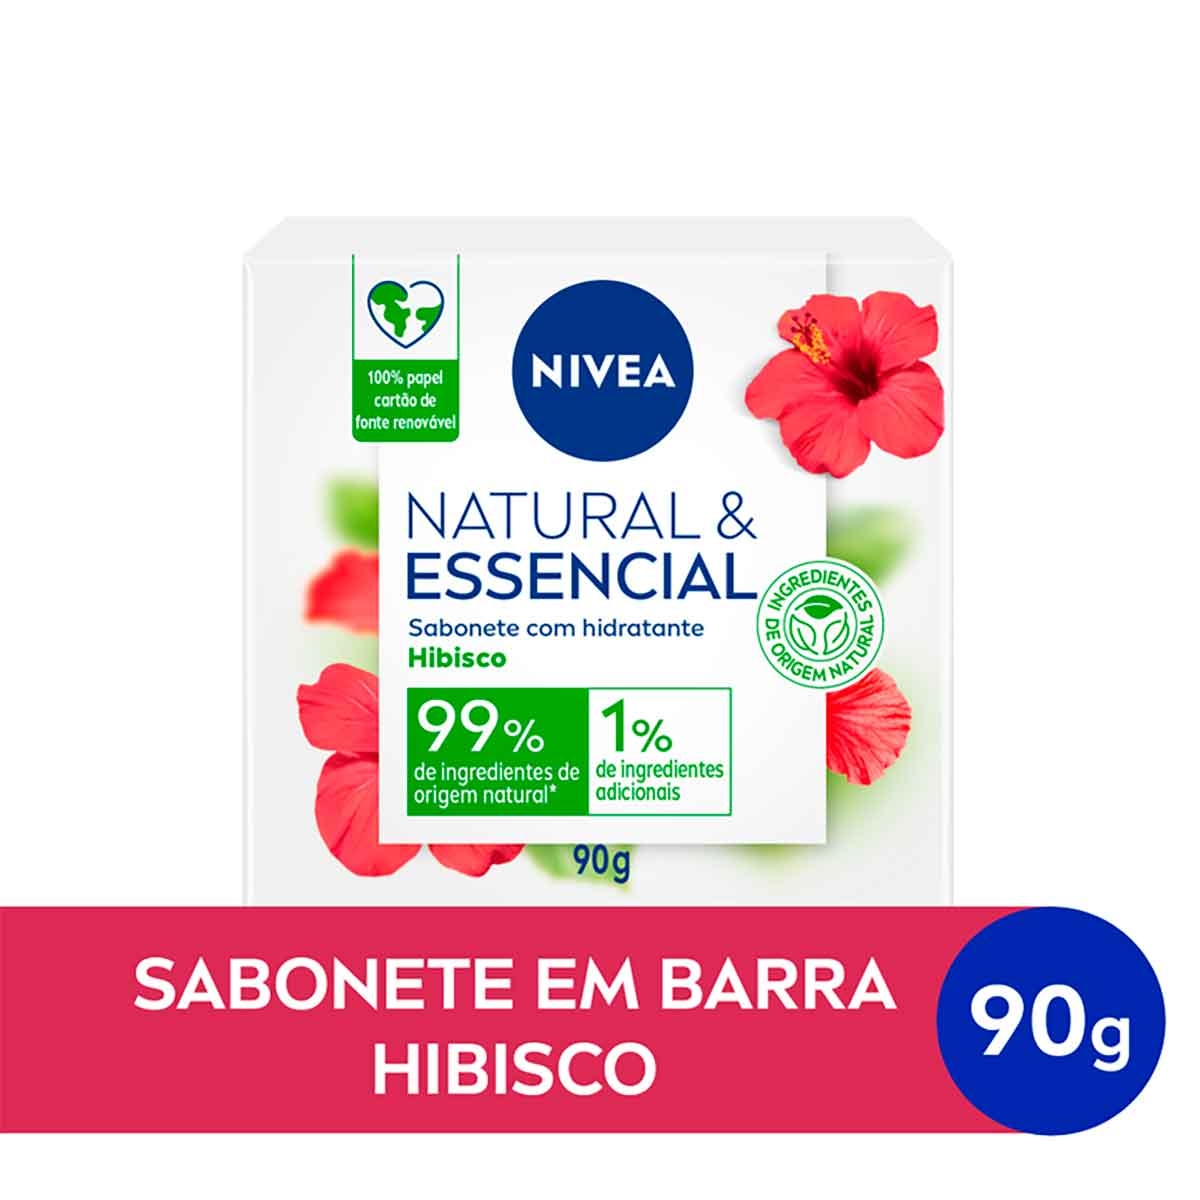 Sabonete em Barra Nivea Natural & Essencial Hibisco 90g 90g